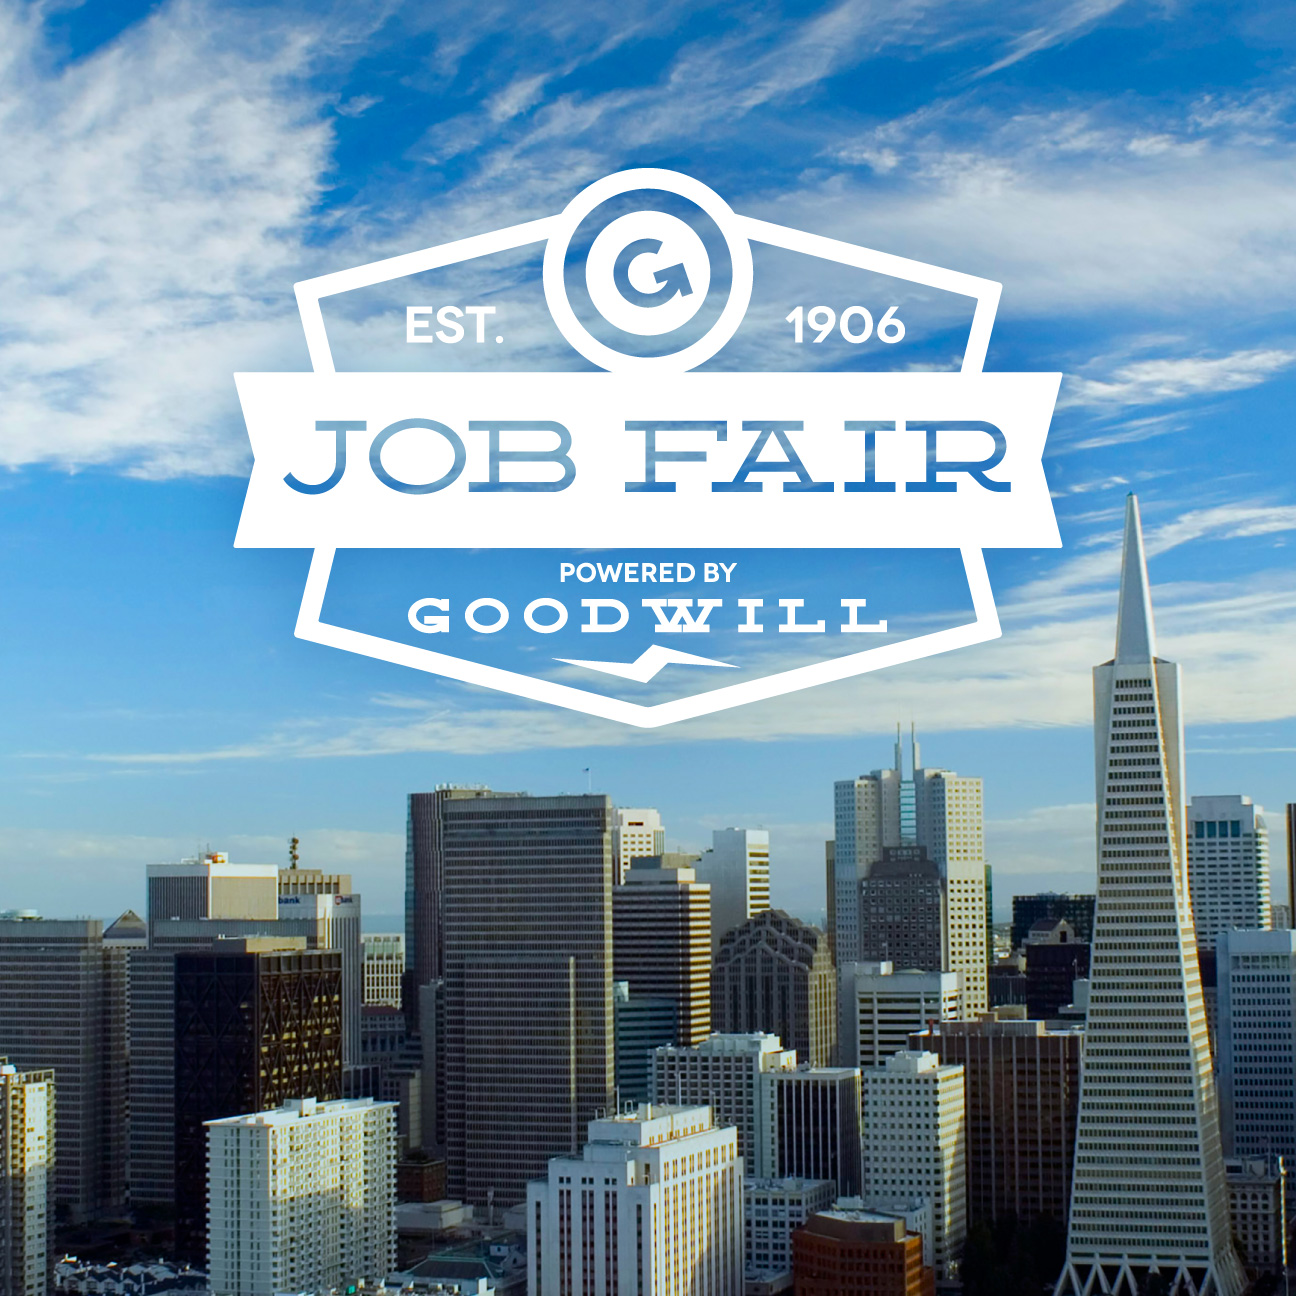 Michael Ham - Portfolio - SF Goodwill Event Badging - Job Fair